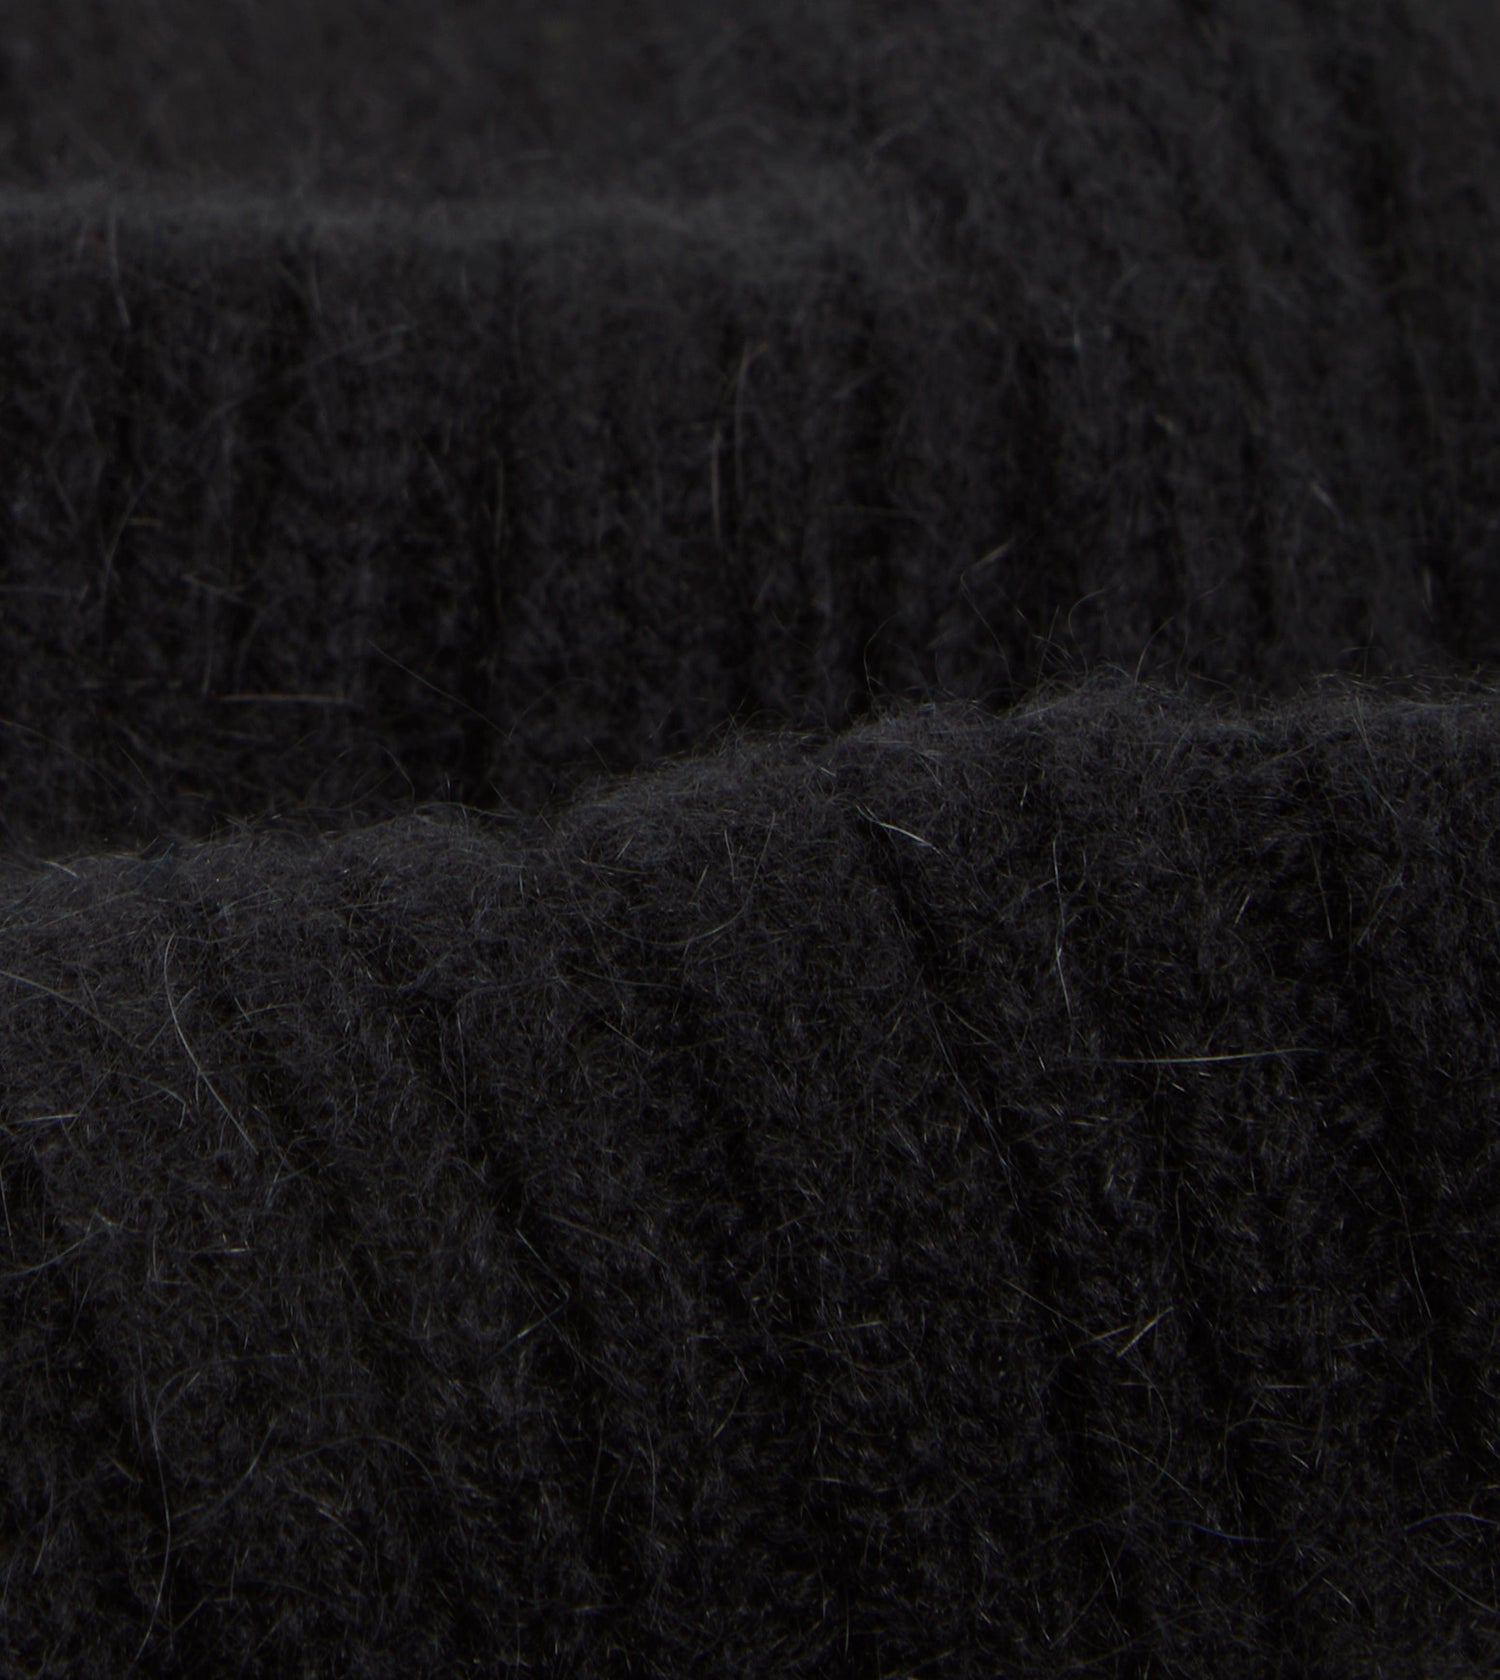 Black Angora Lambswool Ribbed Knit Cap